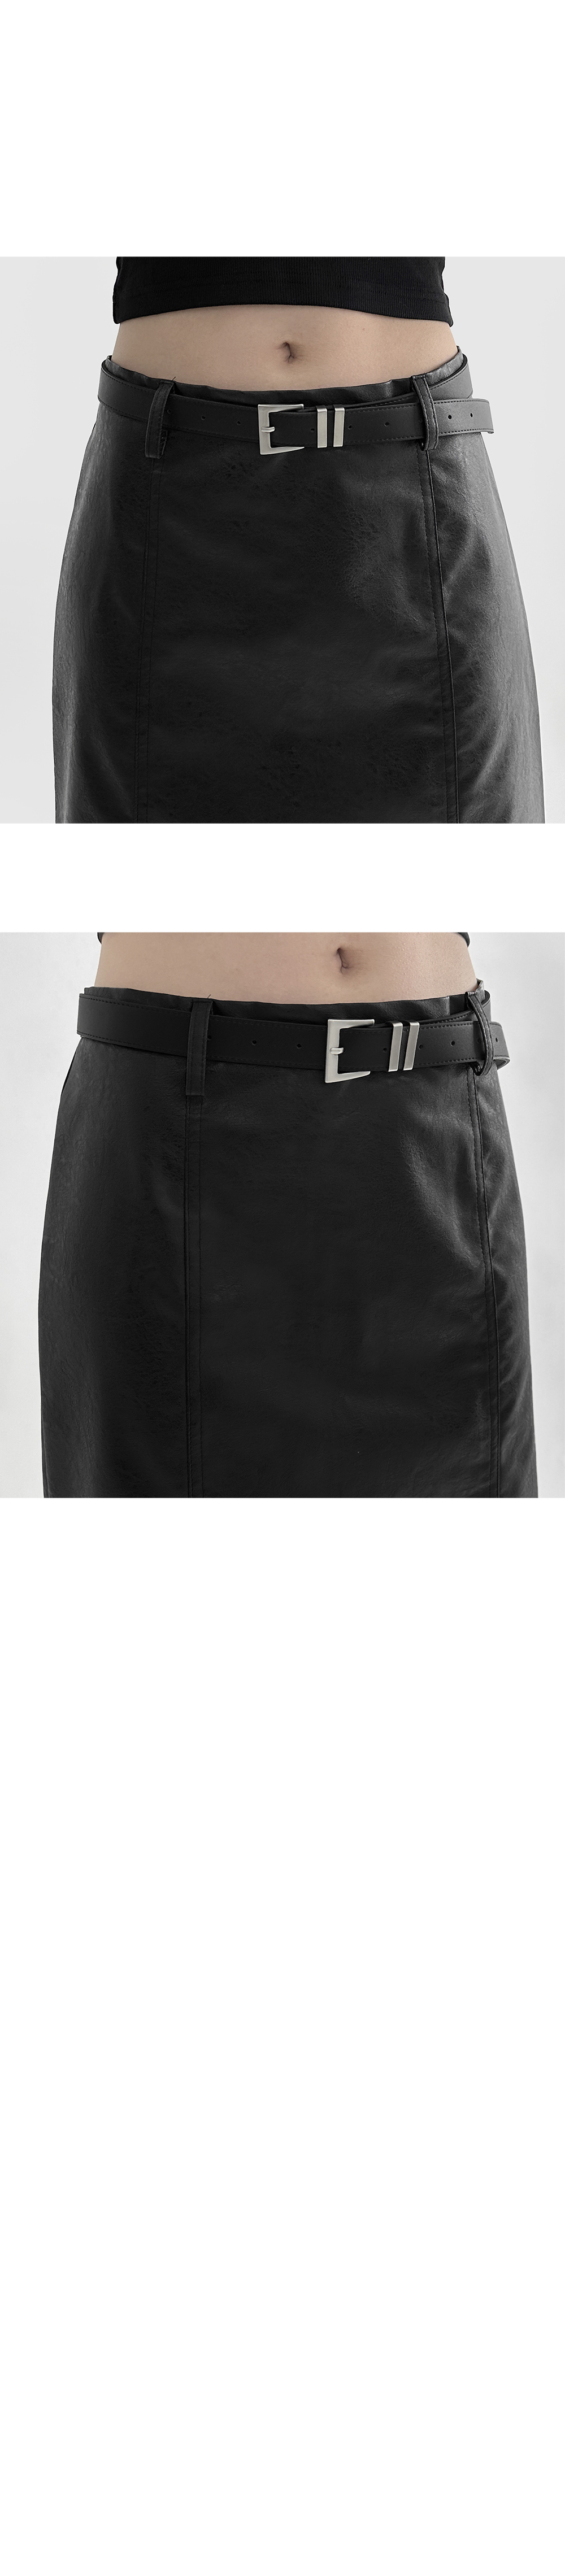 skirt charcoal color image-S1L6